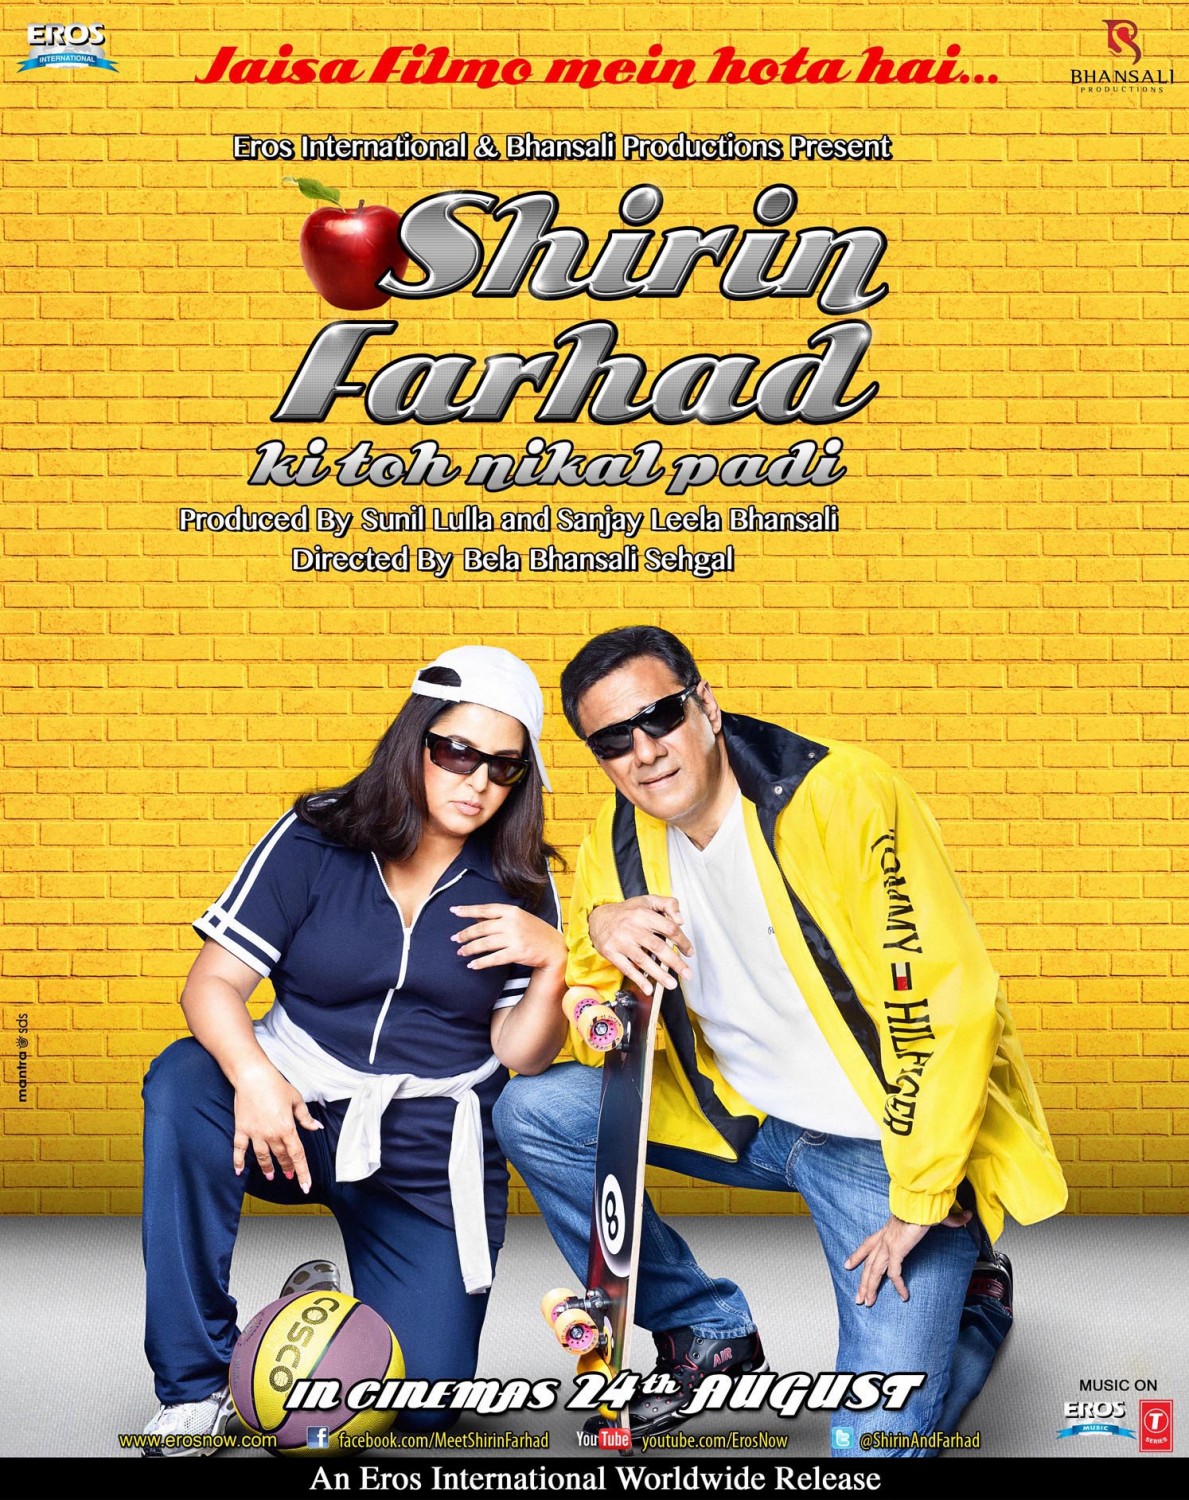 Extra Large Movie Poster Image for Shirin Farhad Ki Toh Nikal Padi (#3 of 3)